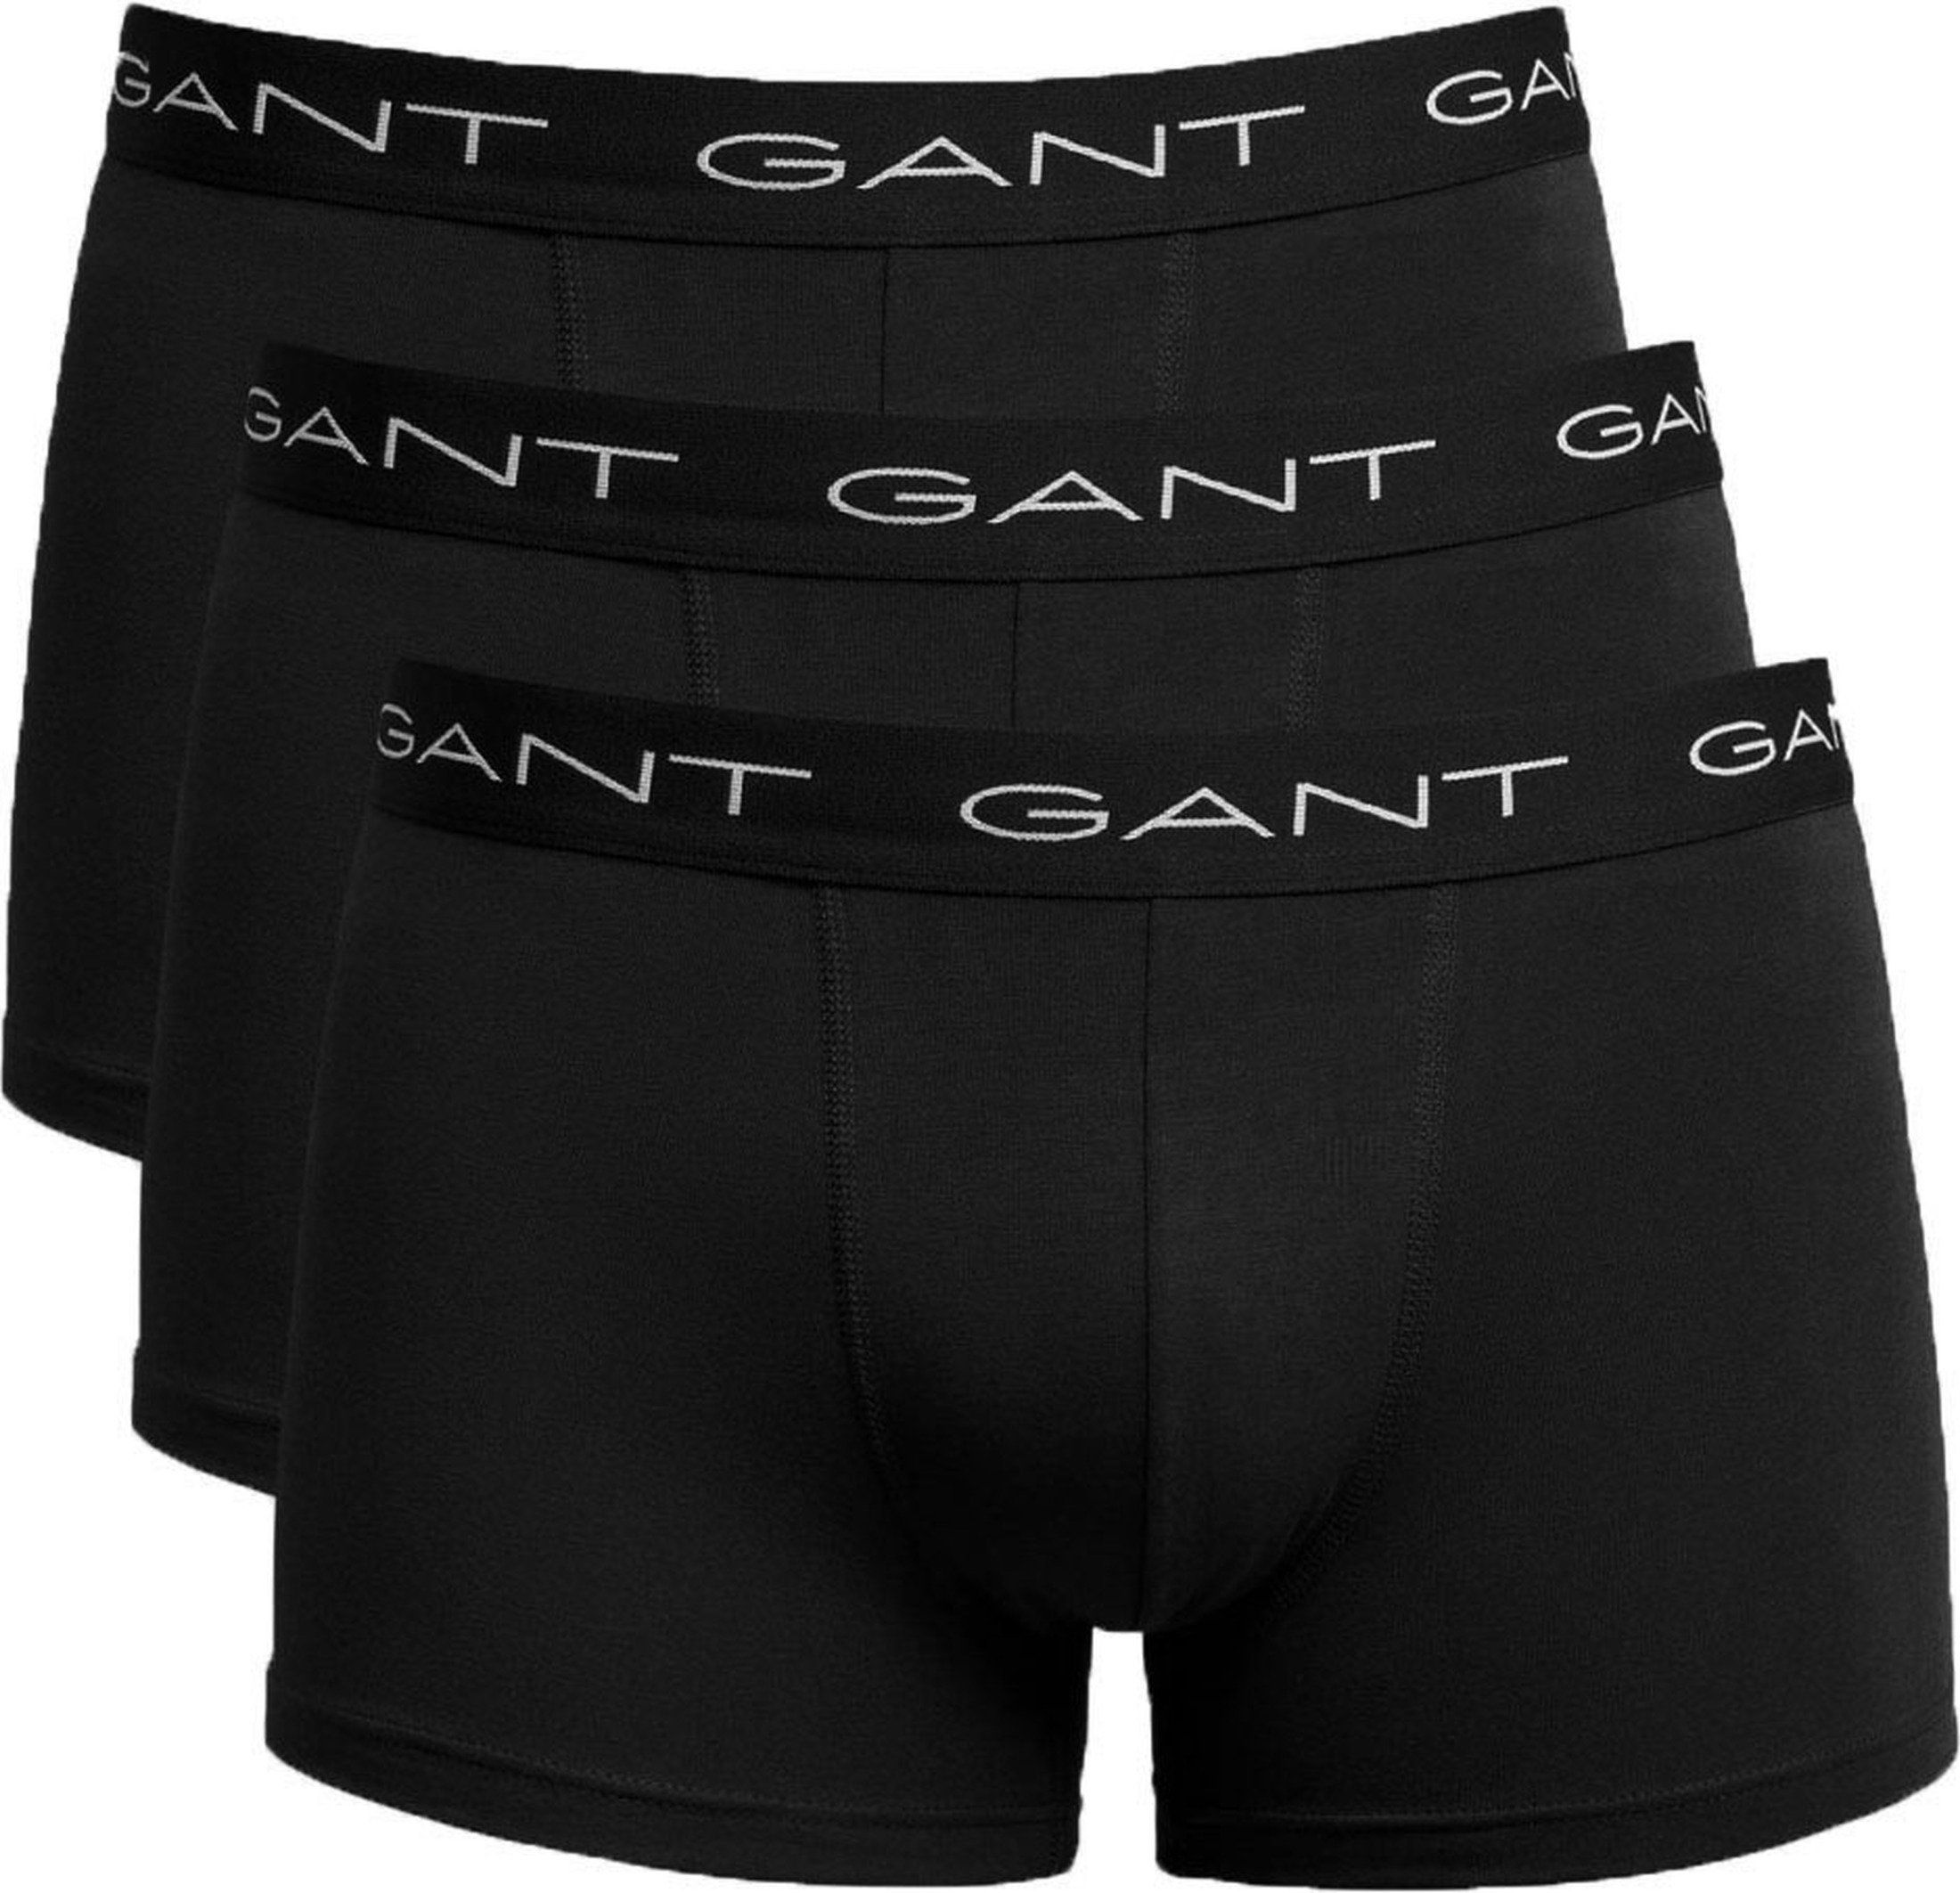 Gant Boxers 3-Pack Black size M